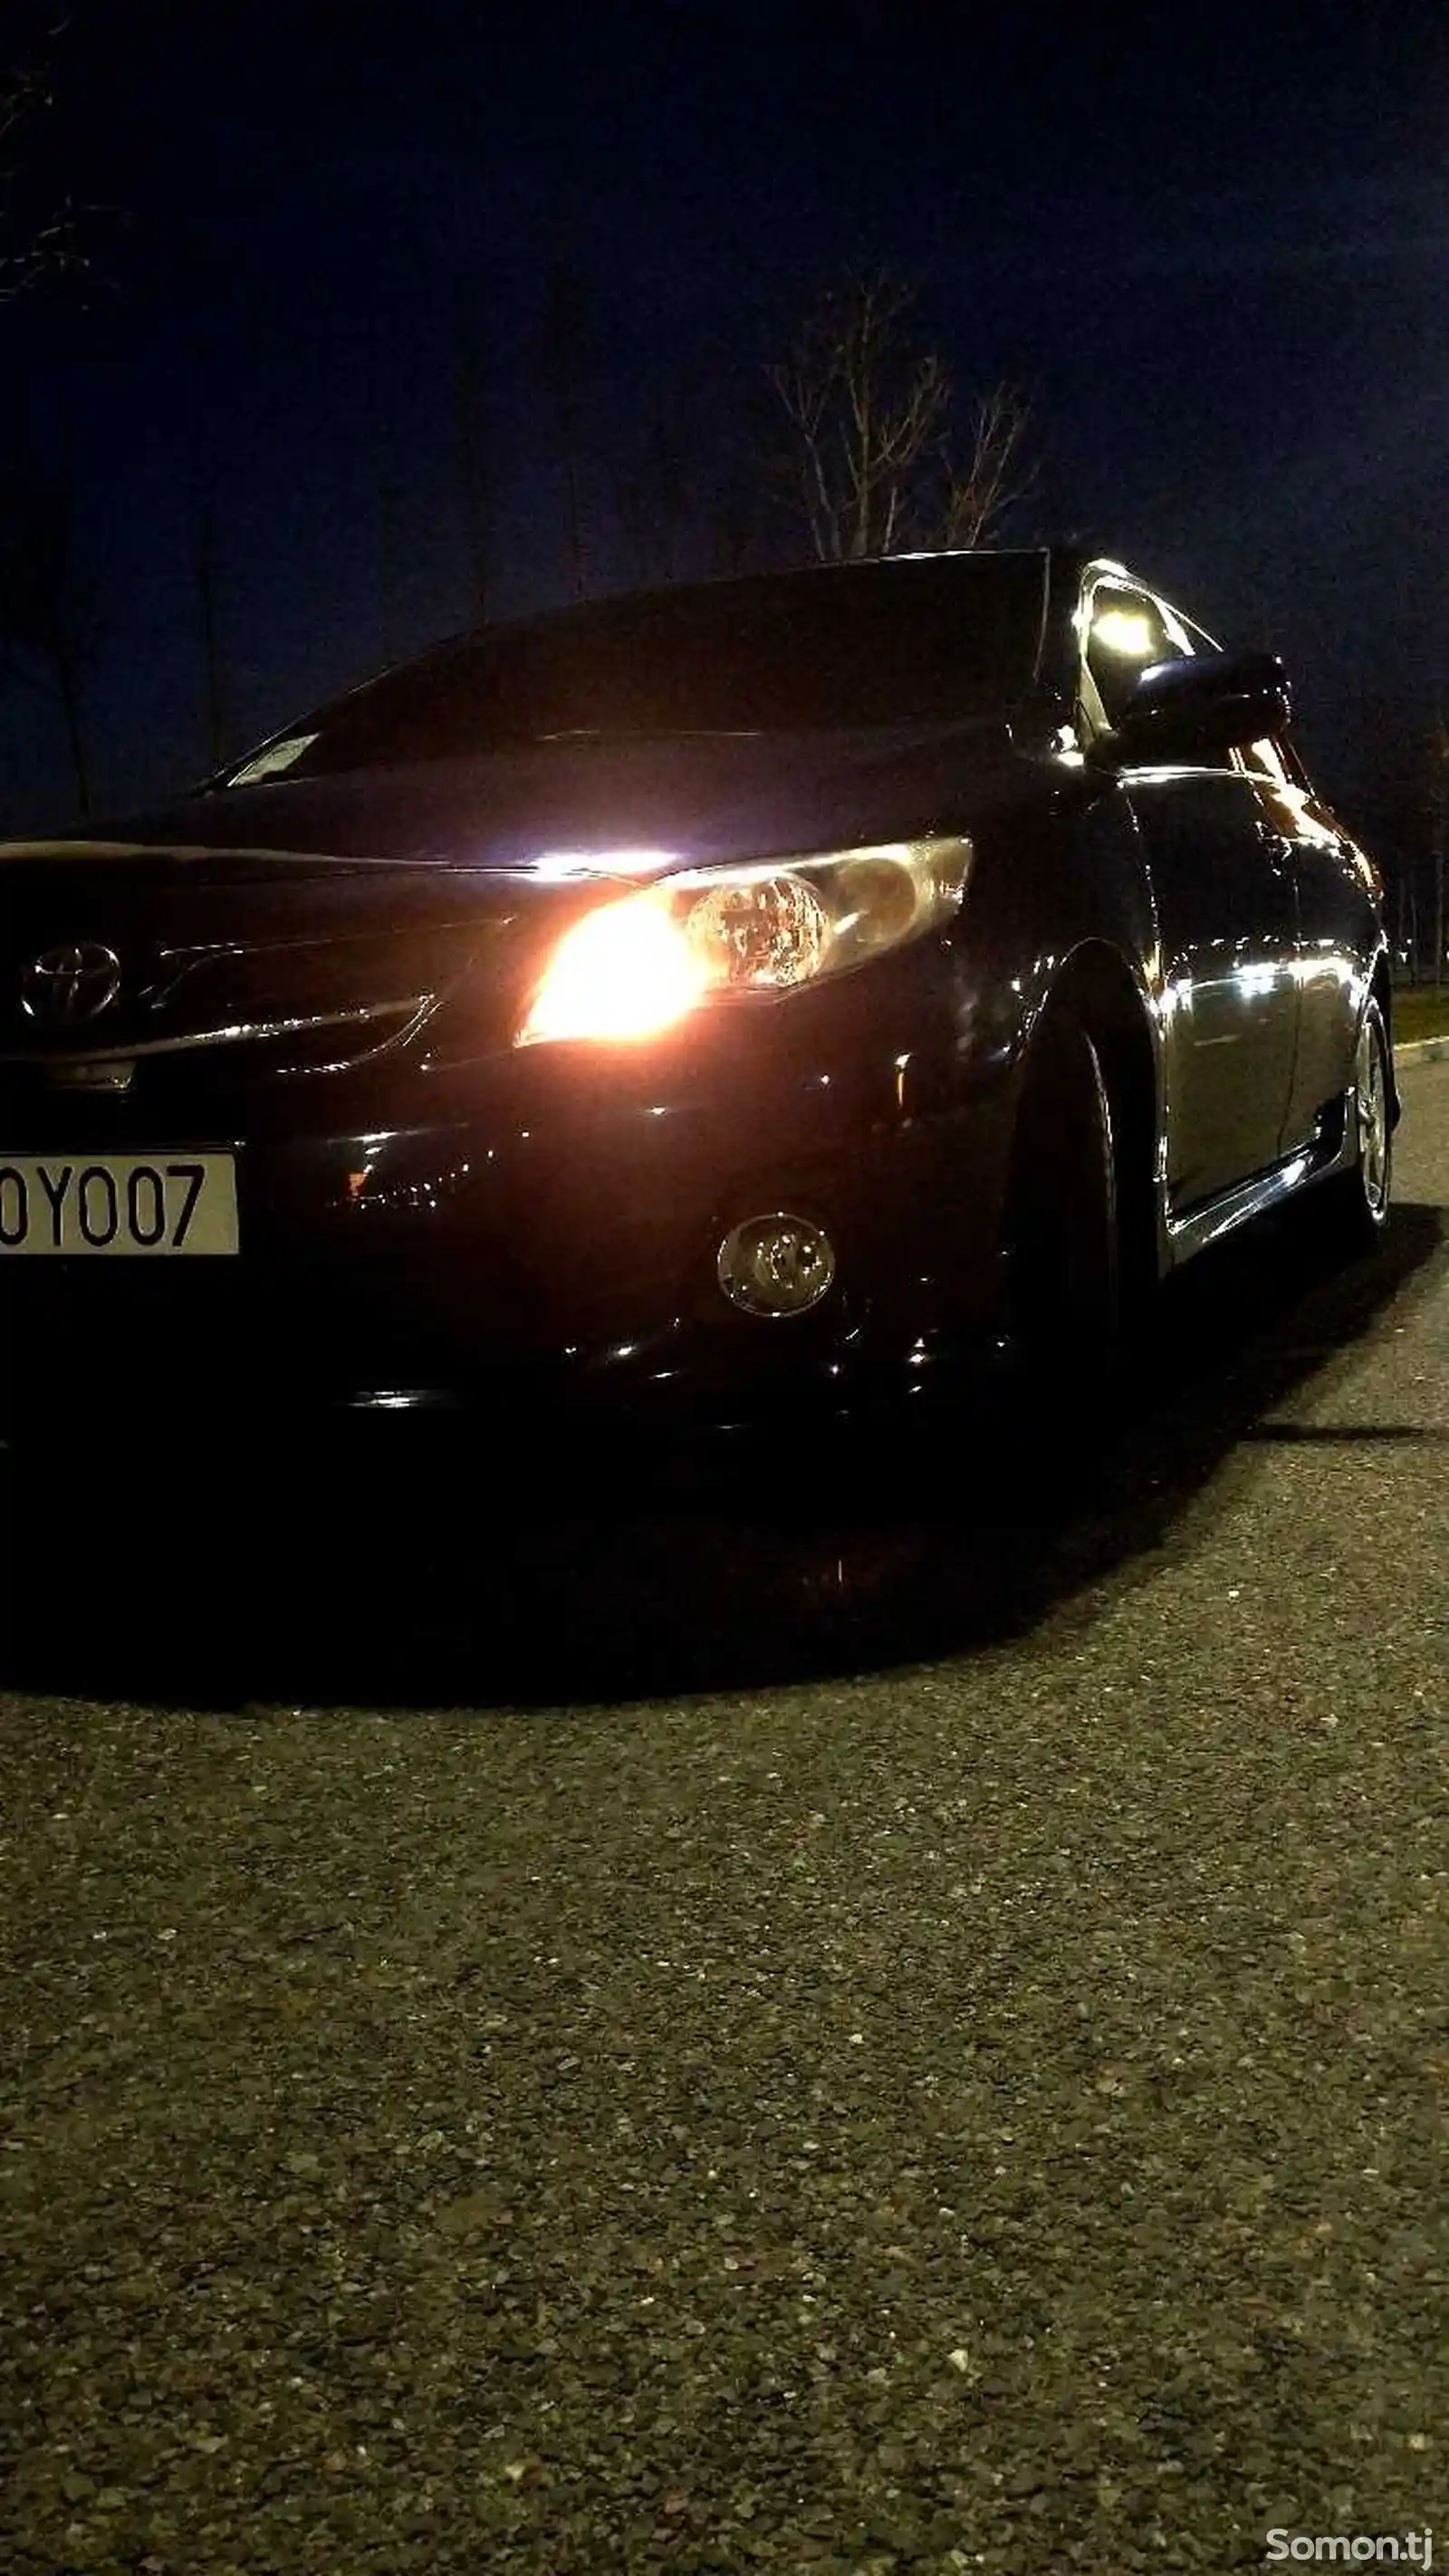 Toyota Corolla, 2012-14